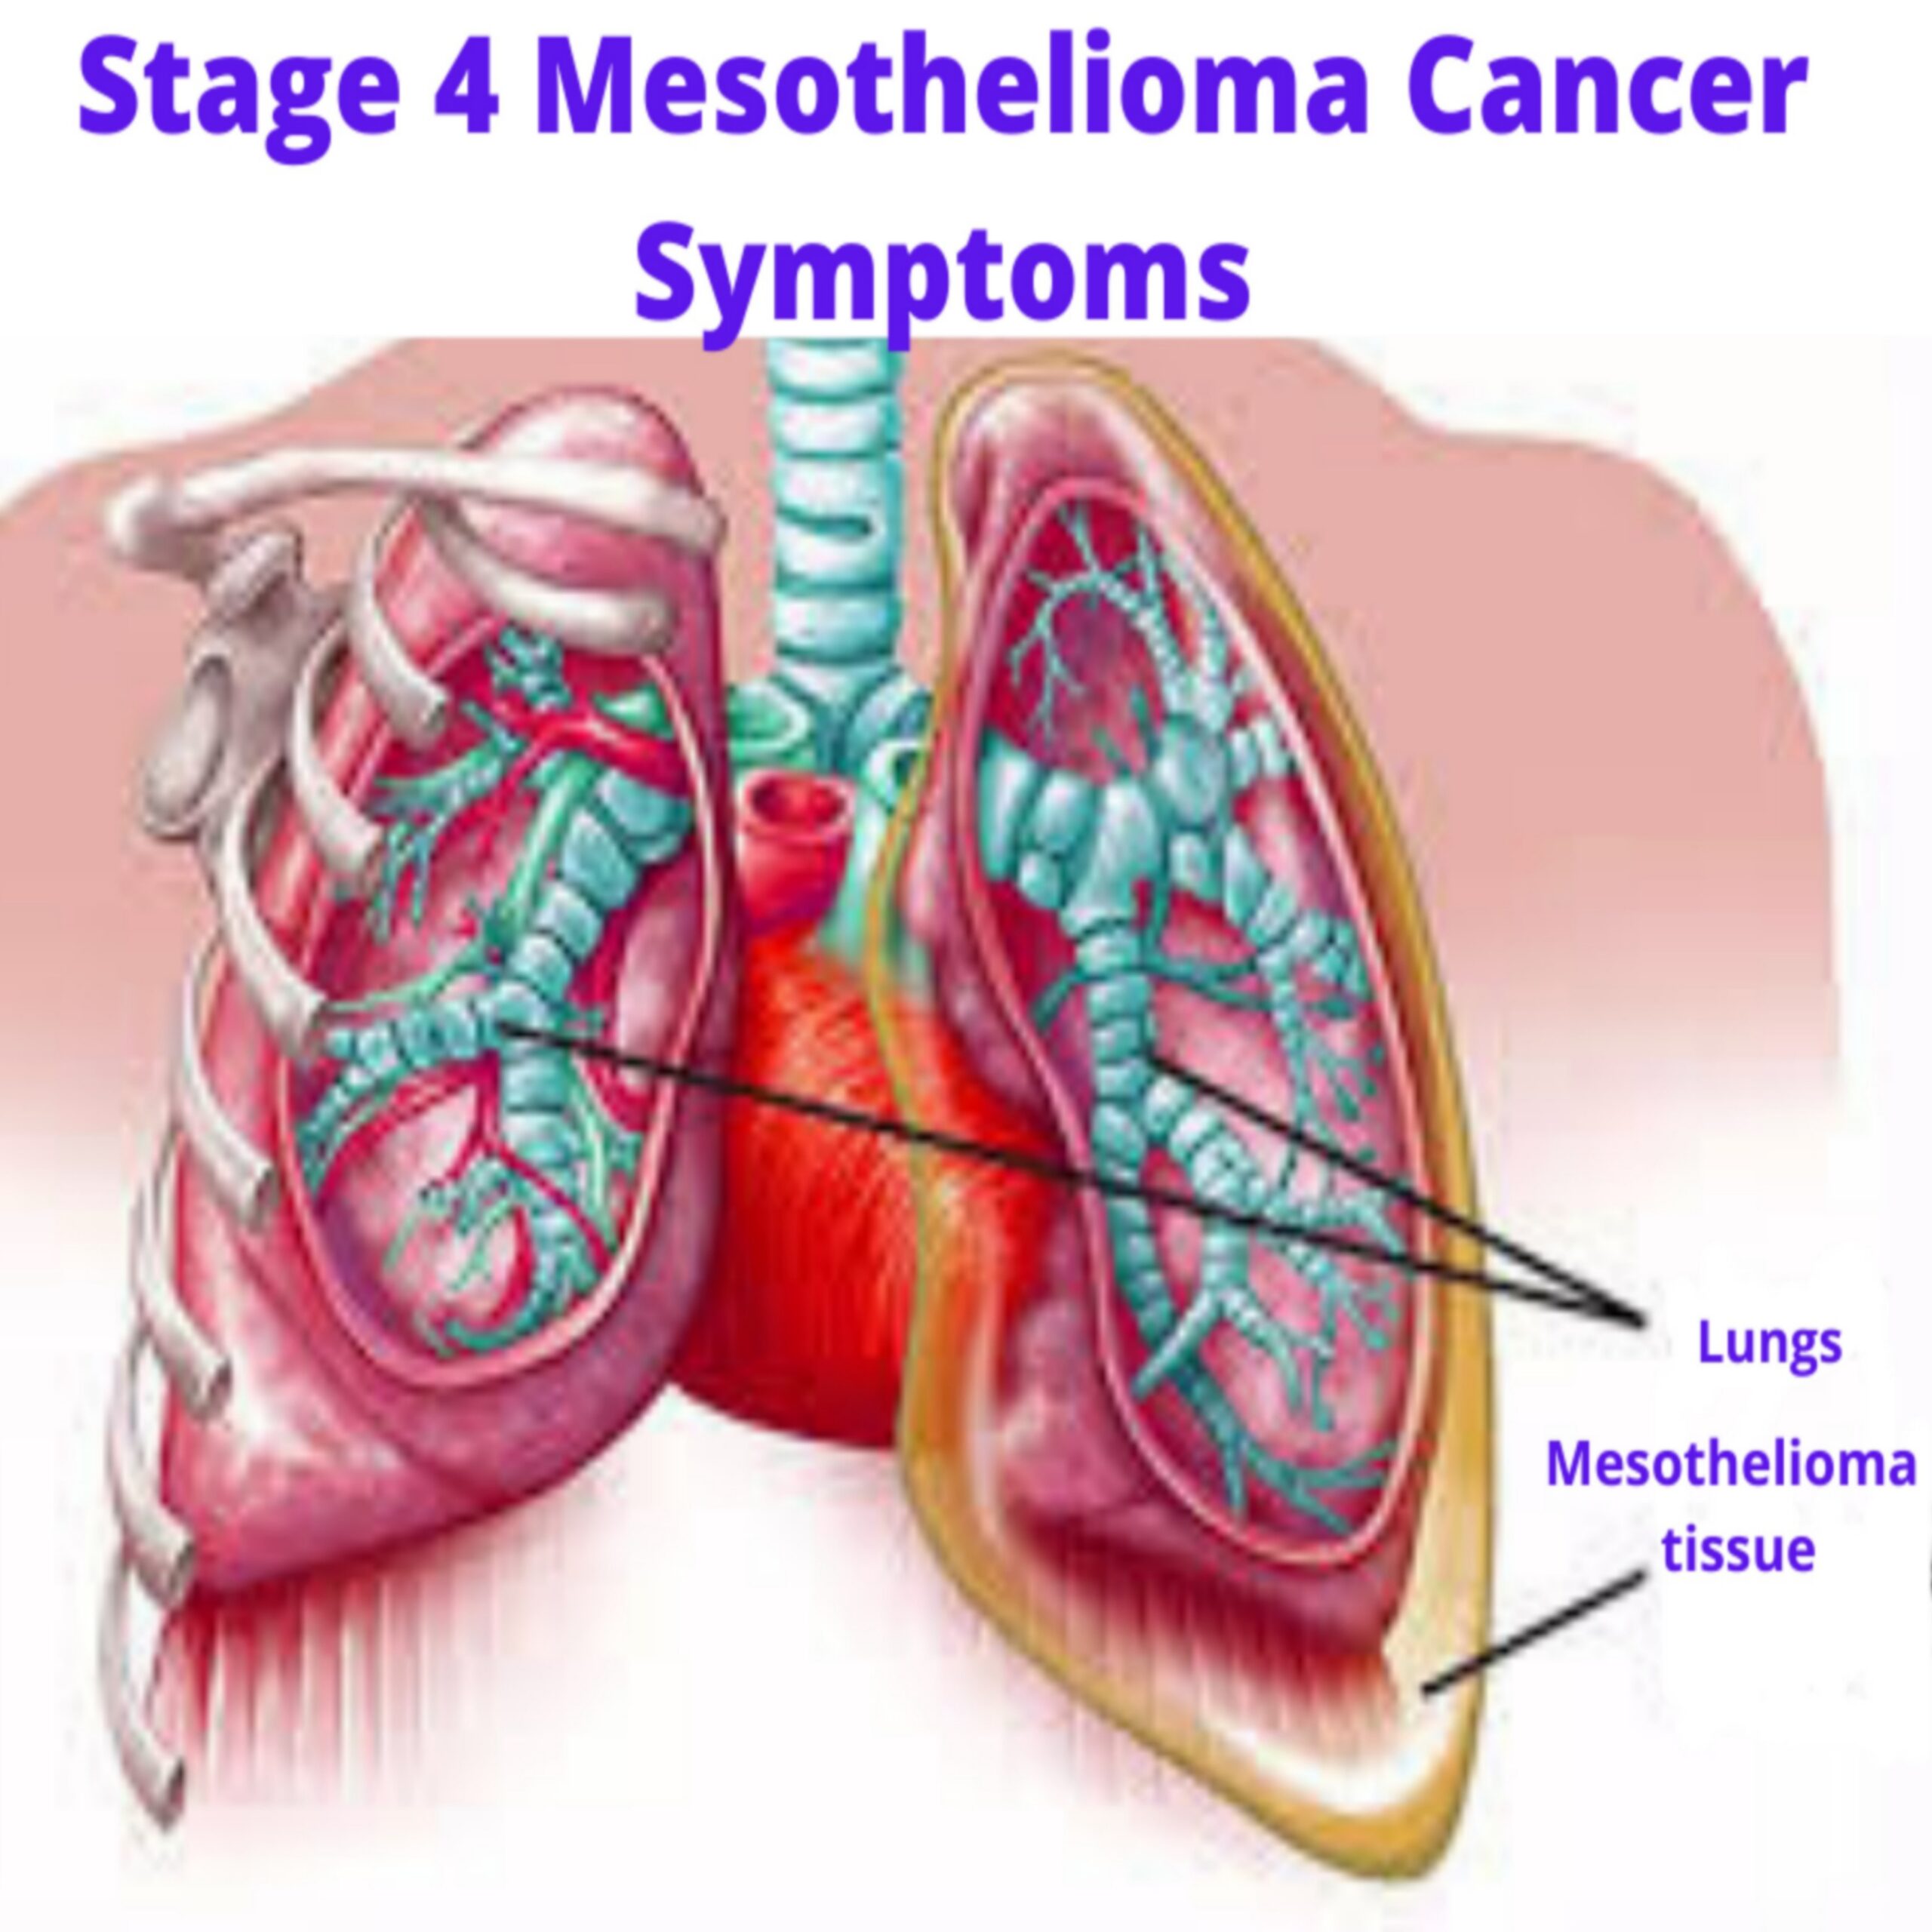 Stage 4 Mesothelioma Cancer Symptoms | Mesothelioma